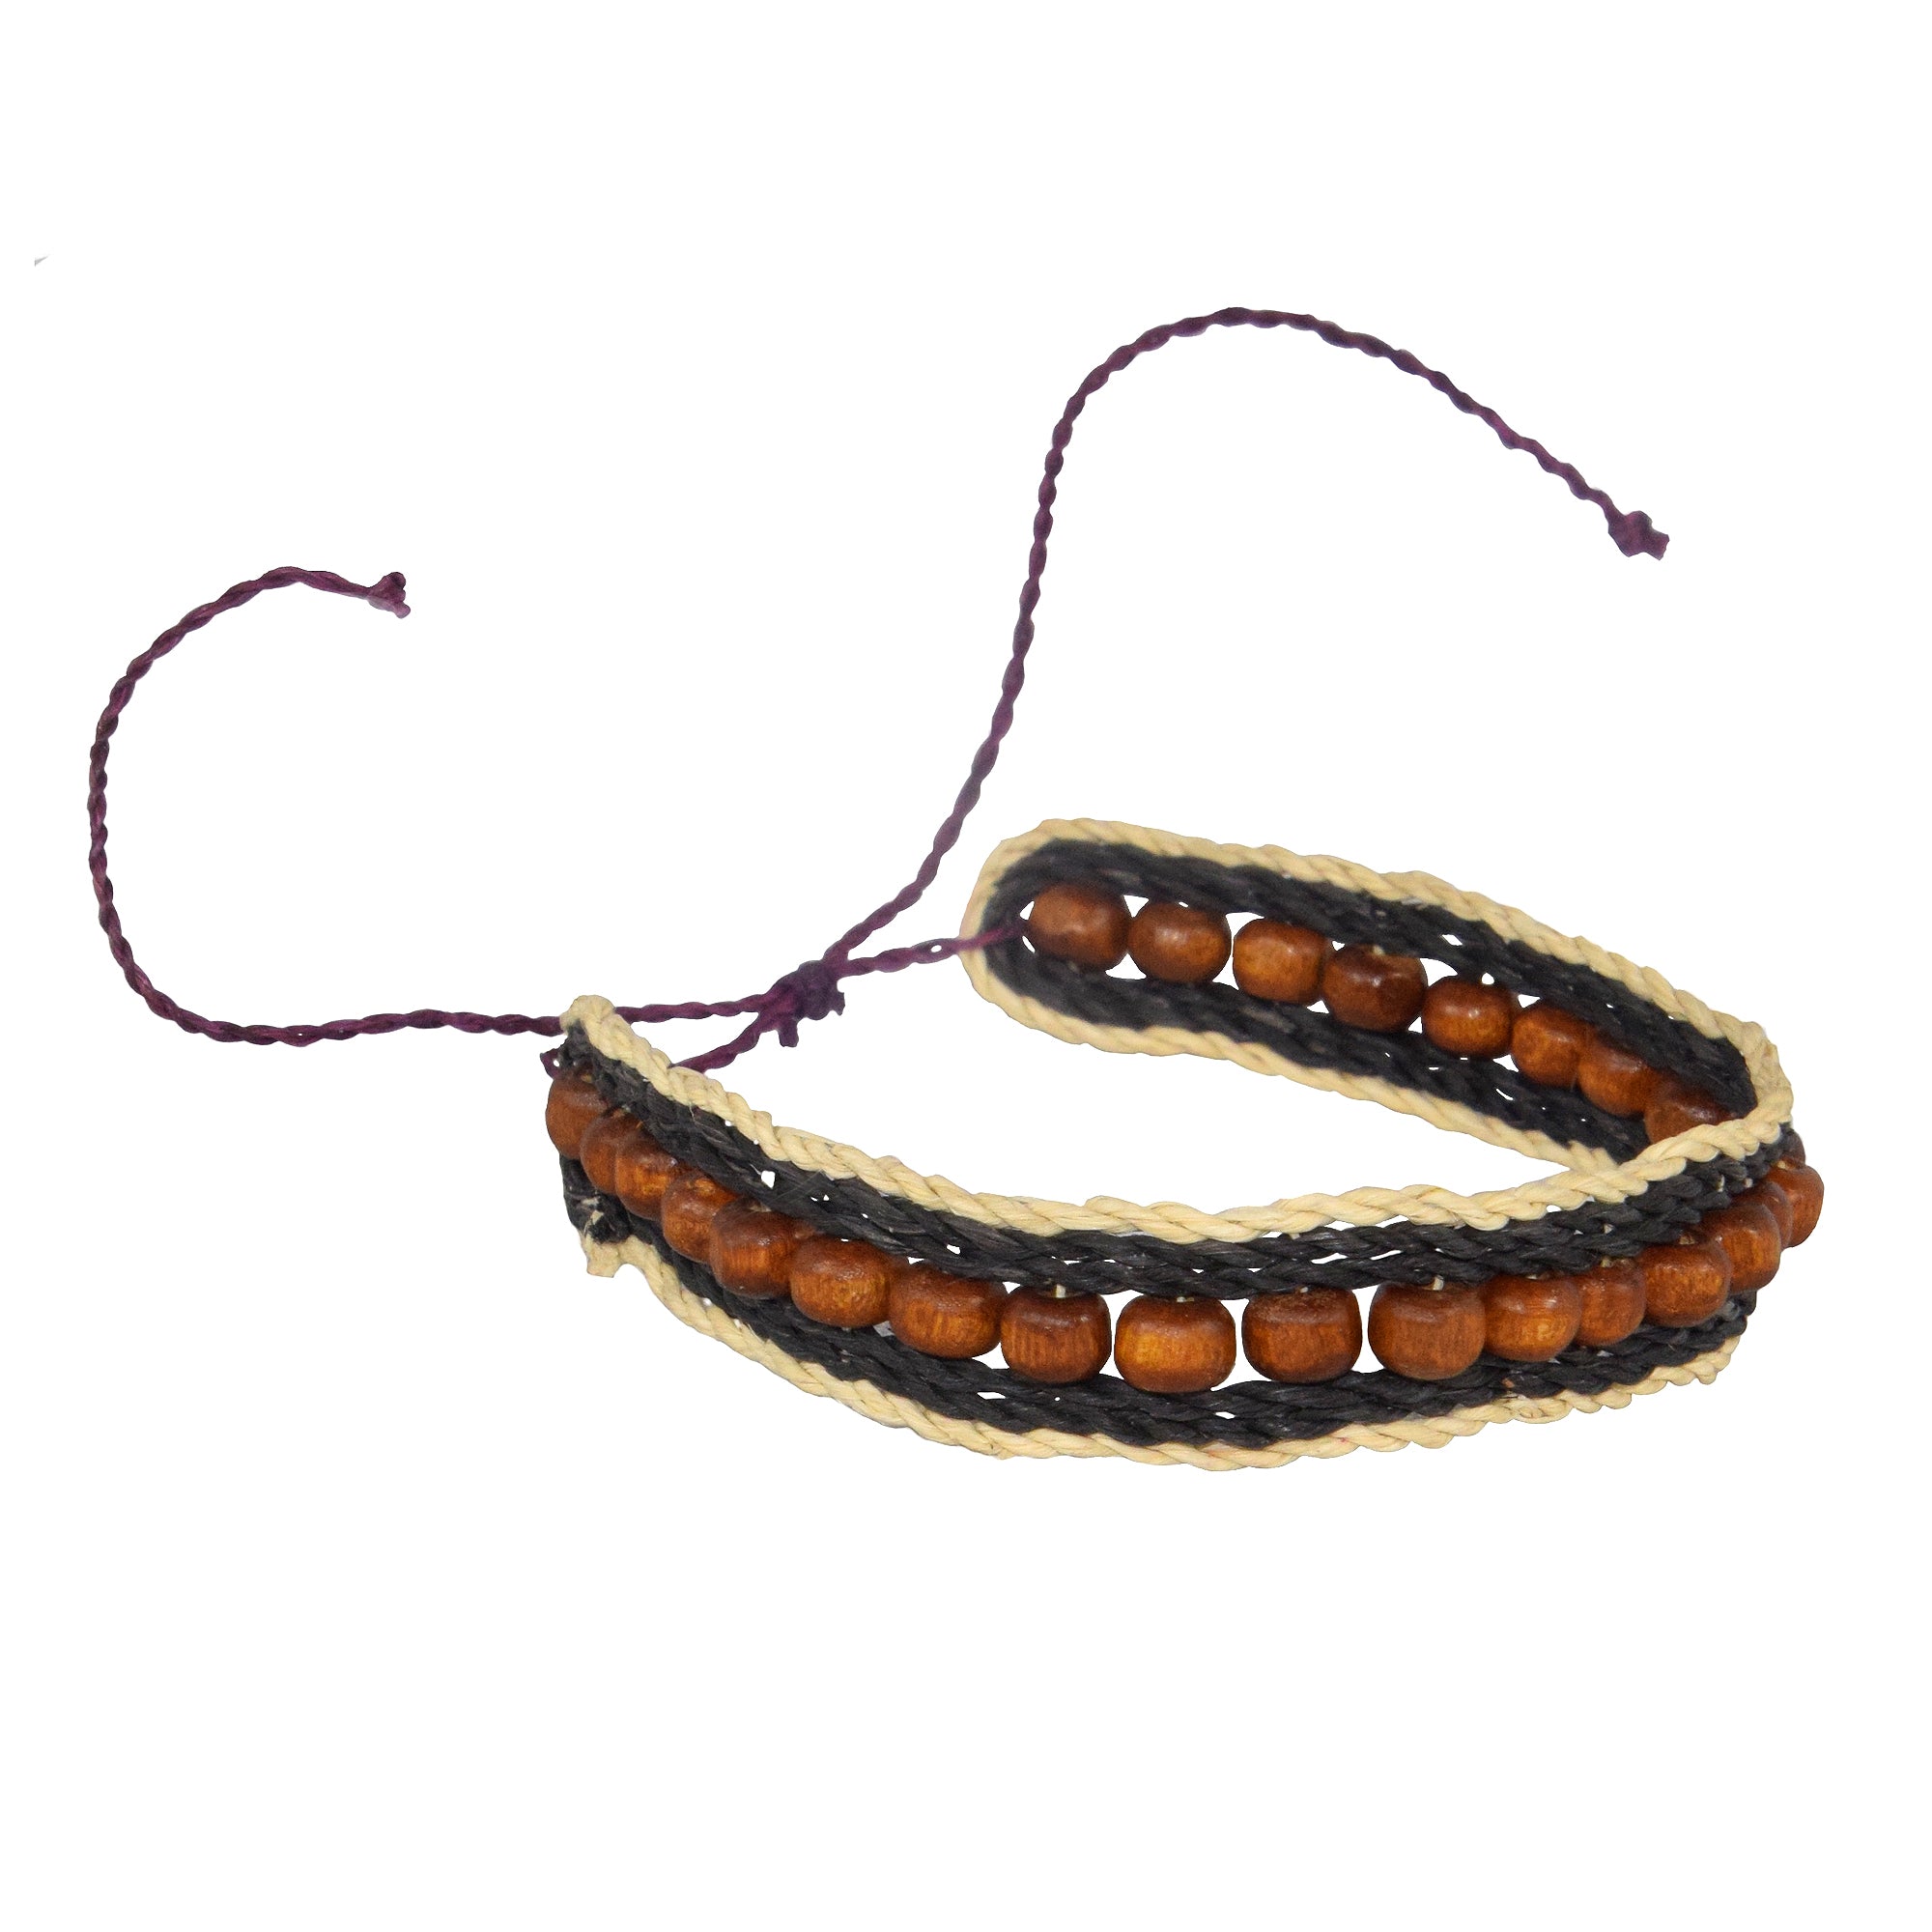 Two-tone chambira palm fiber and wooden bead bracelet